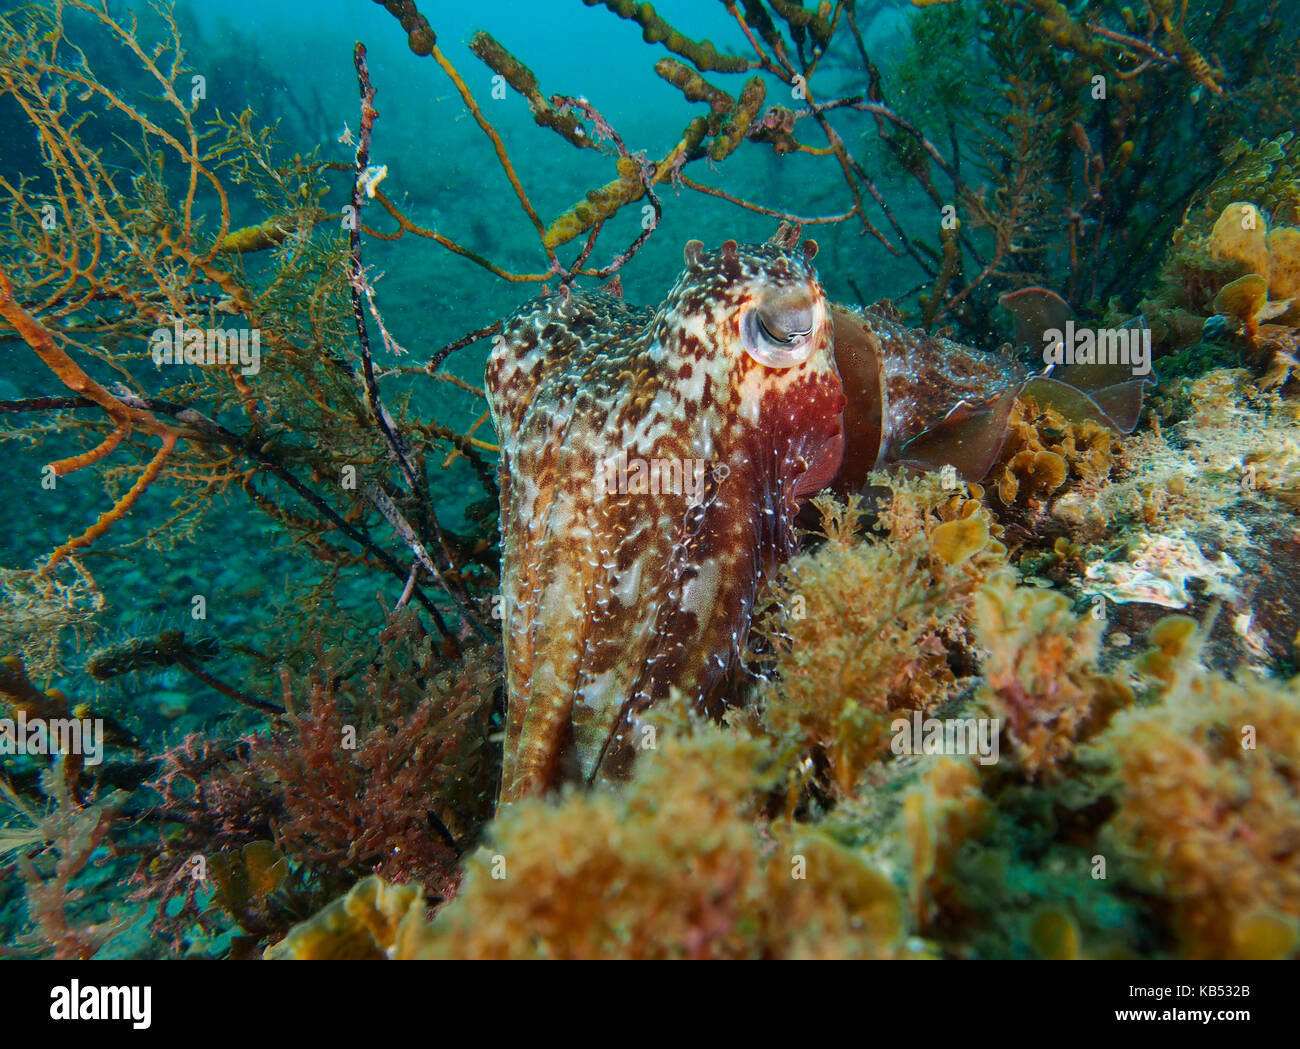 Australian cuttlefish (Sepia apama) hiding in the weed, Australia, South Australia, Yankalilla, Rapid Bay jetty Stock Photo